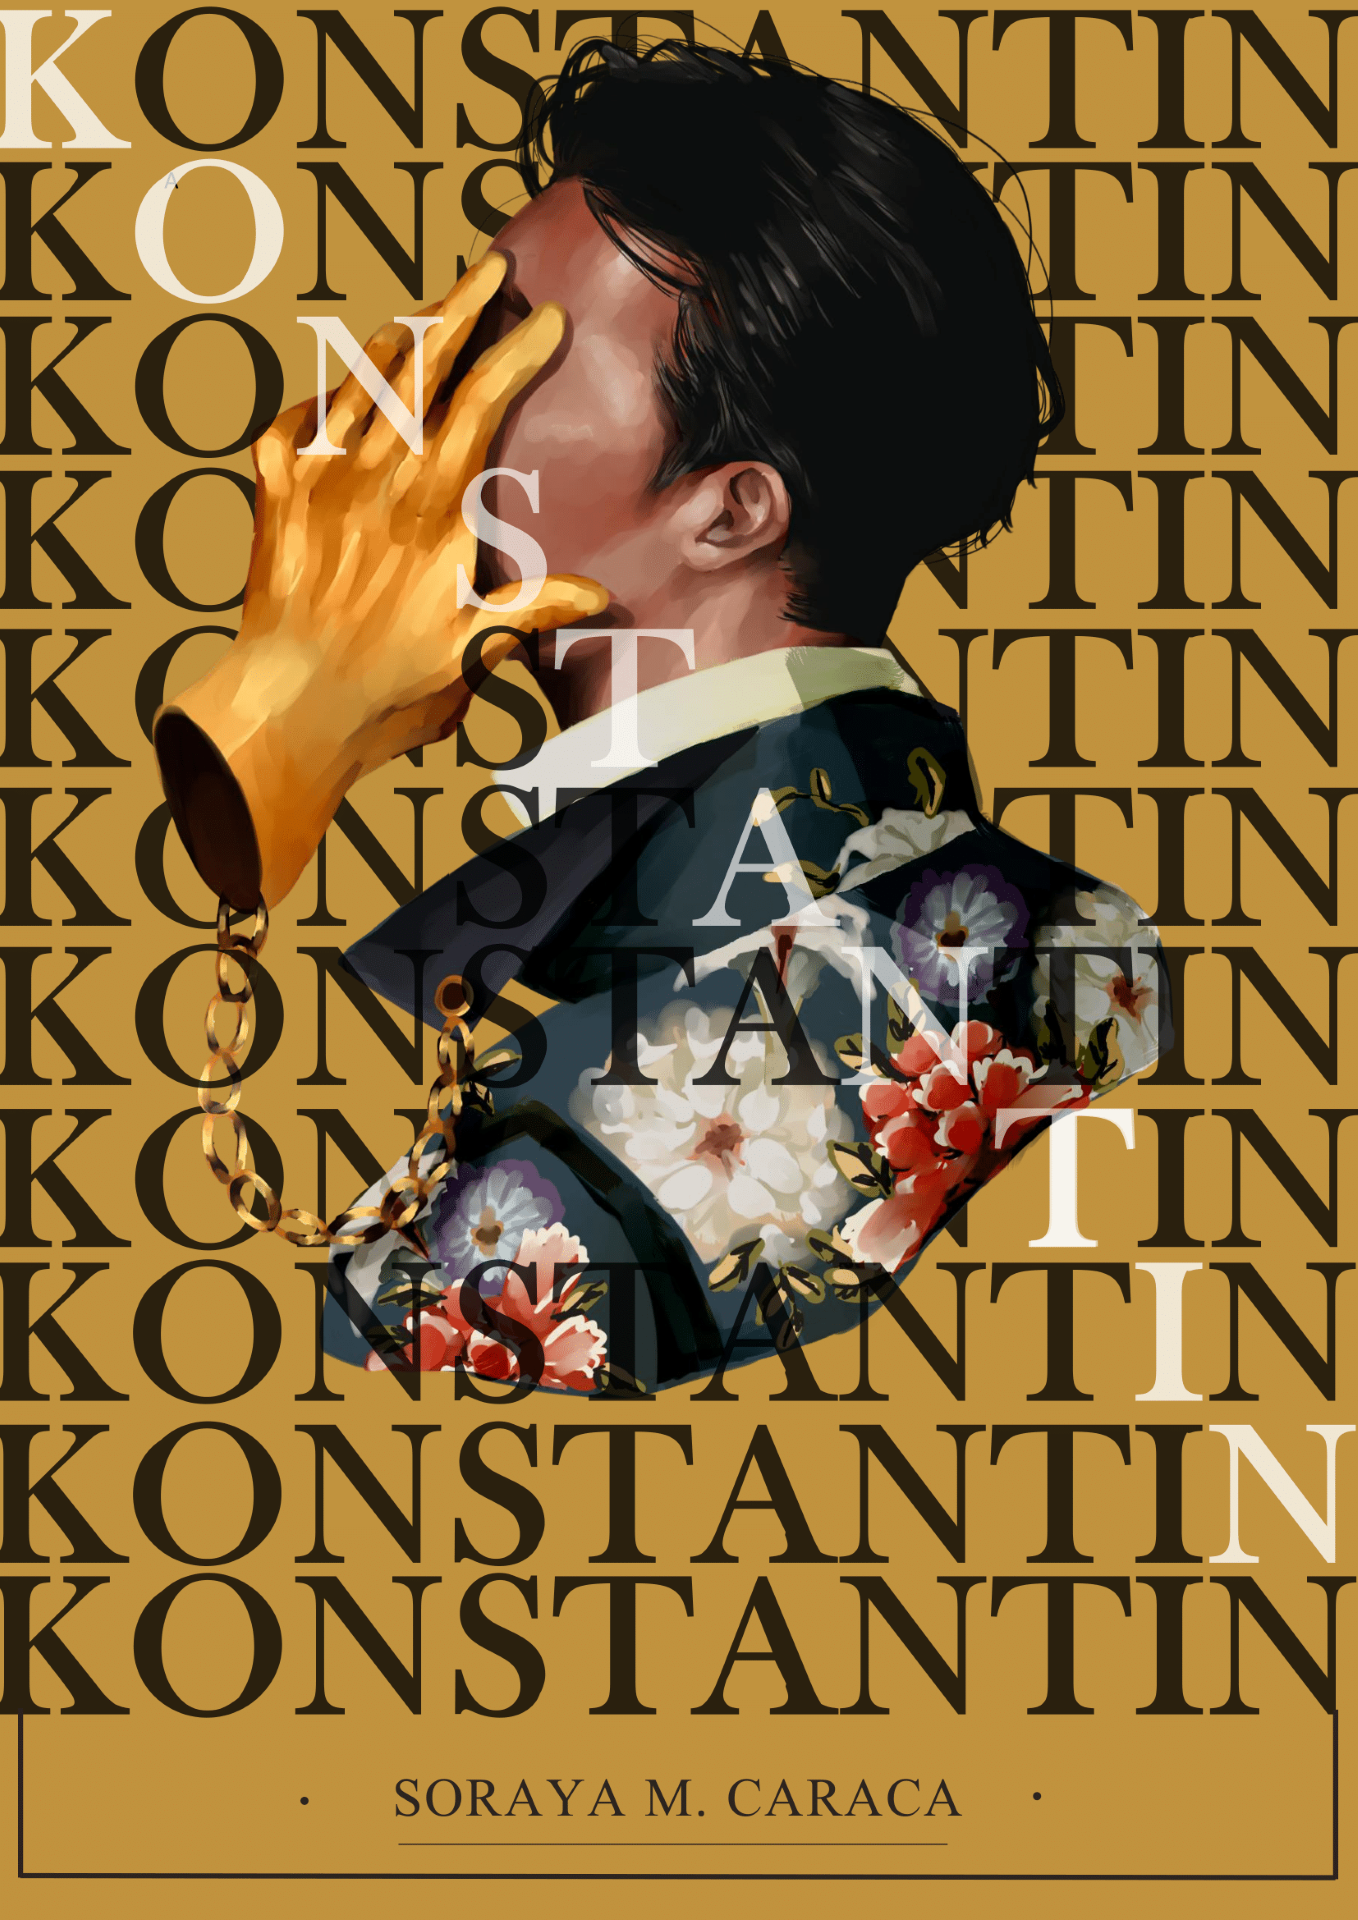 "Konstantin magazine cover" | Digital painting